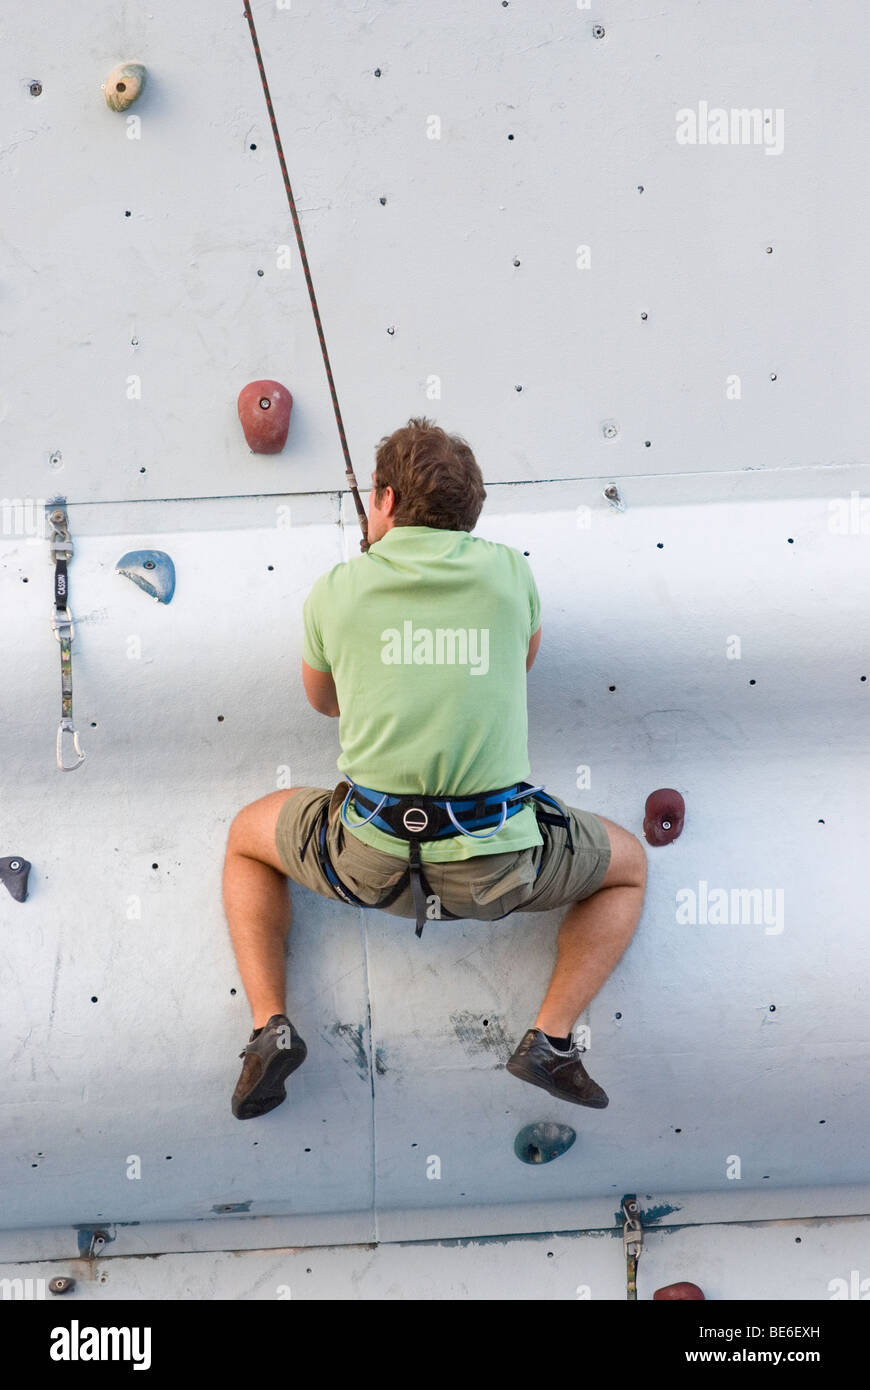 freeclimber on climbing wall Stock Photo